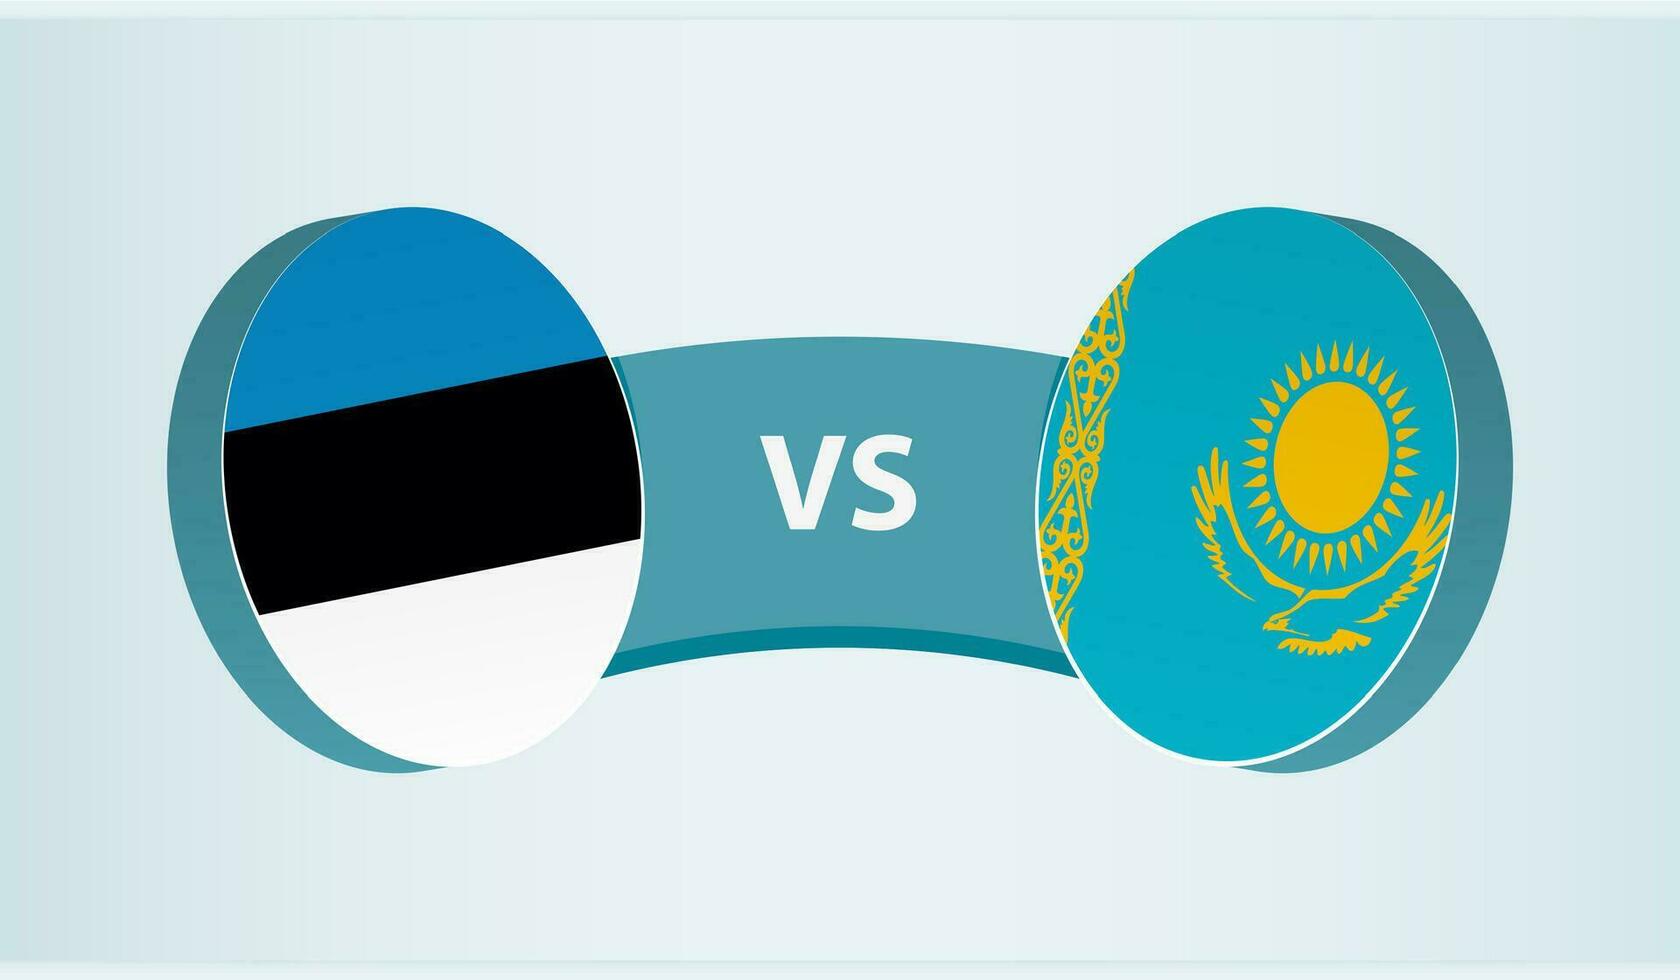 Estonia versus Kazakhstan, team sports competition concept. vector